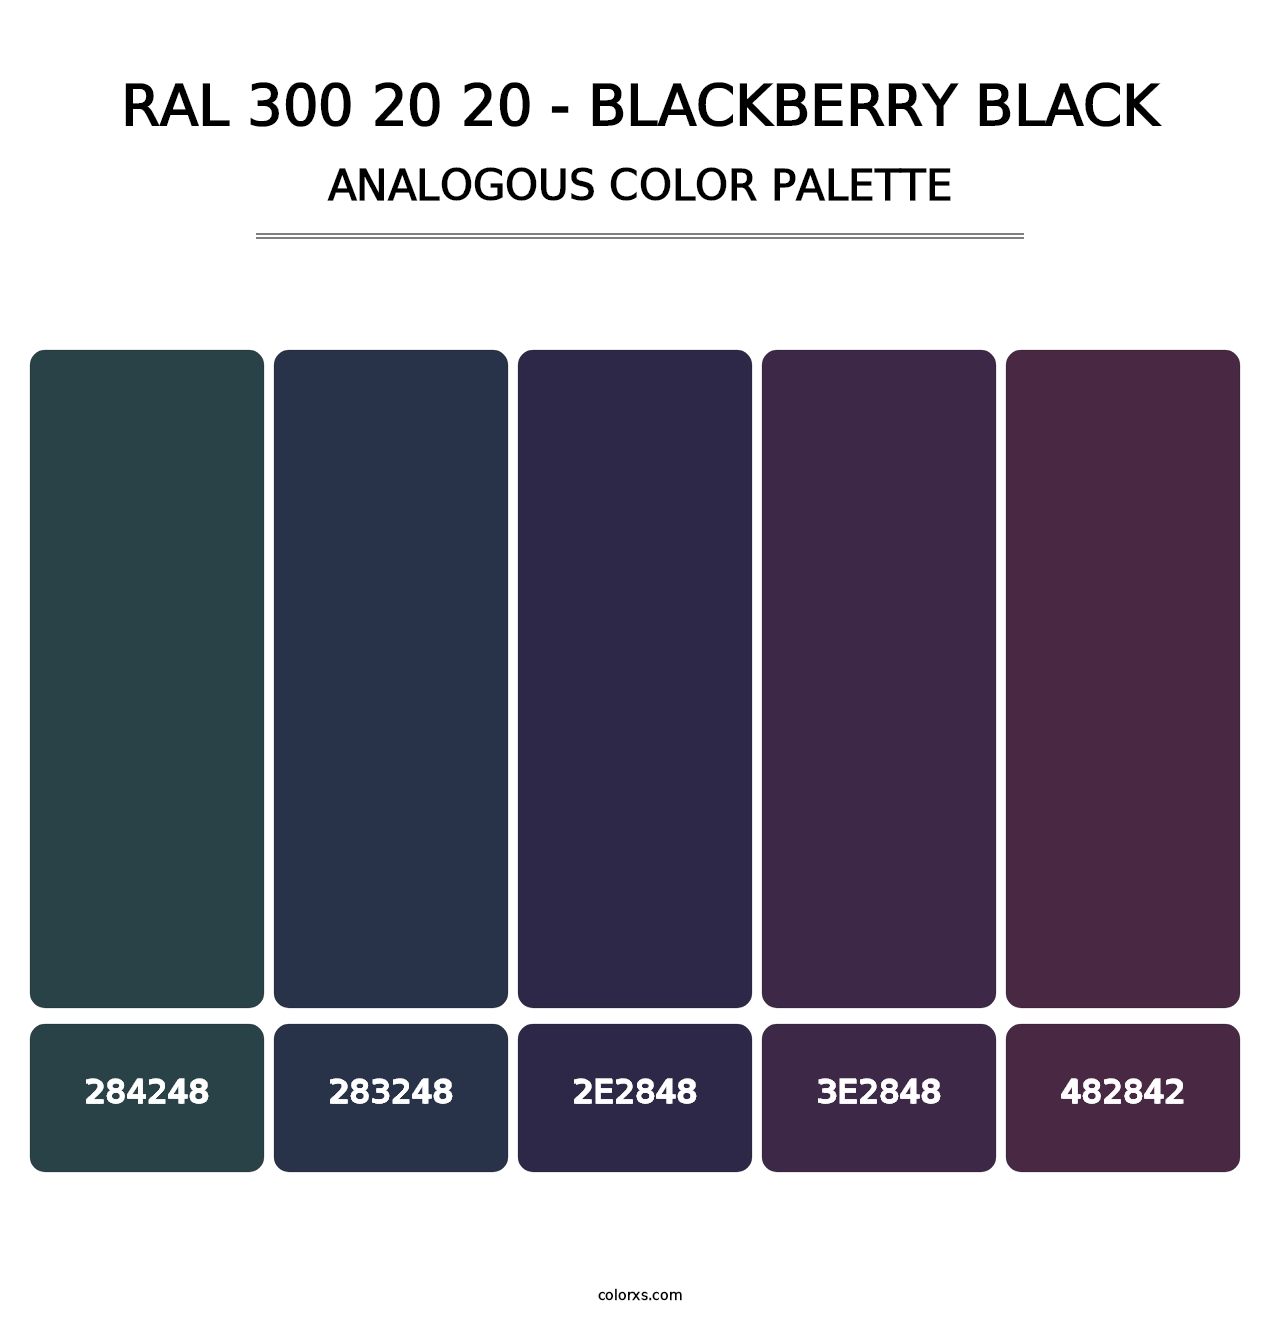 RAL 300 20 20 - Blackberry Black - Analogous Color Palette